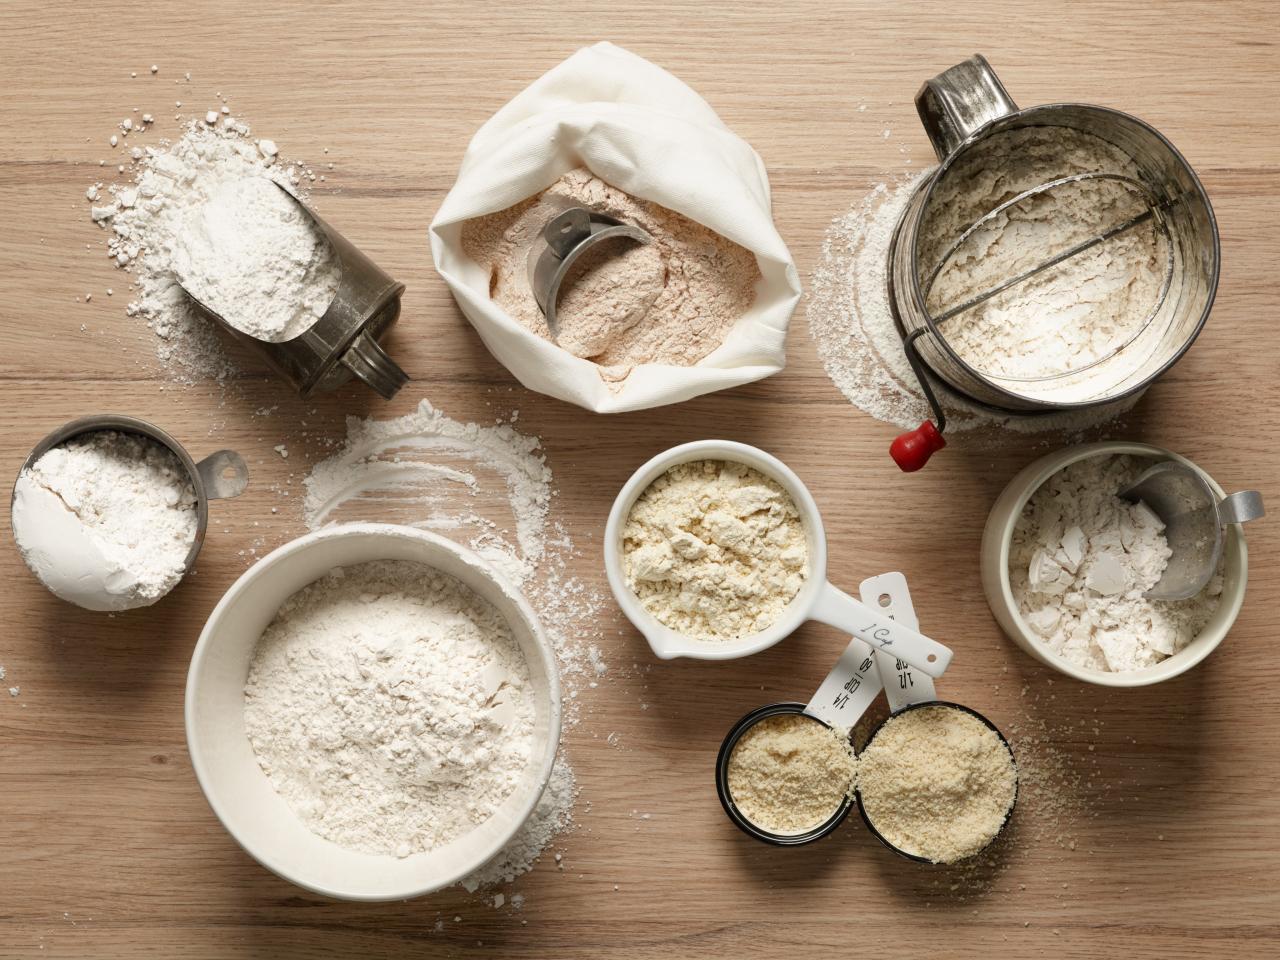 Cricket flour vs cricket powder